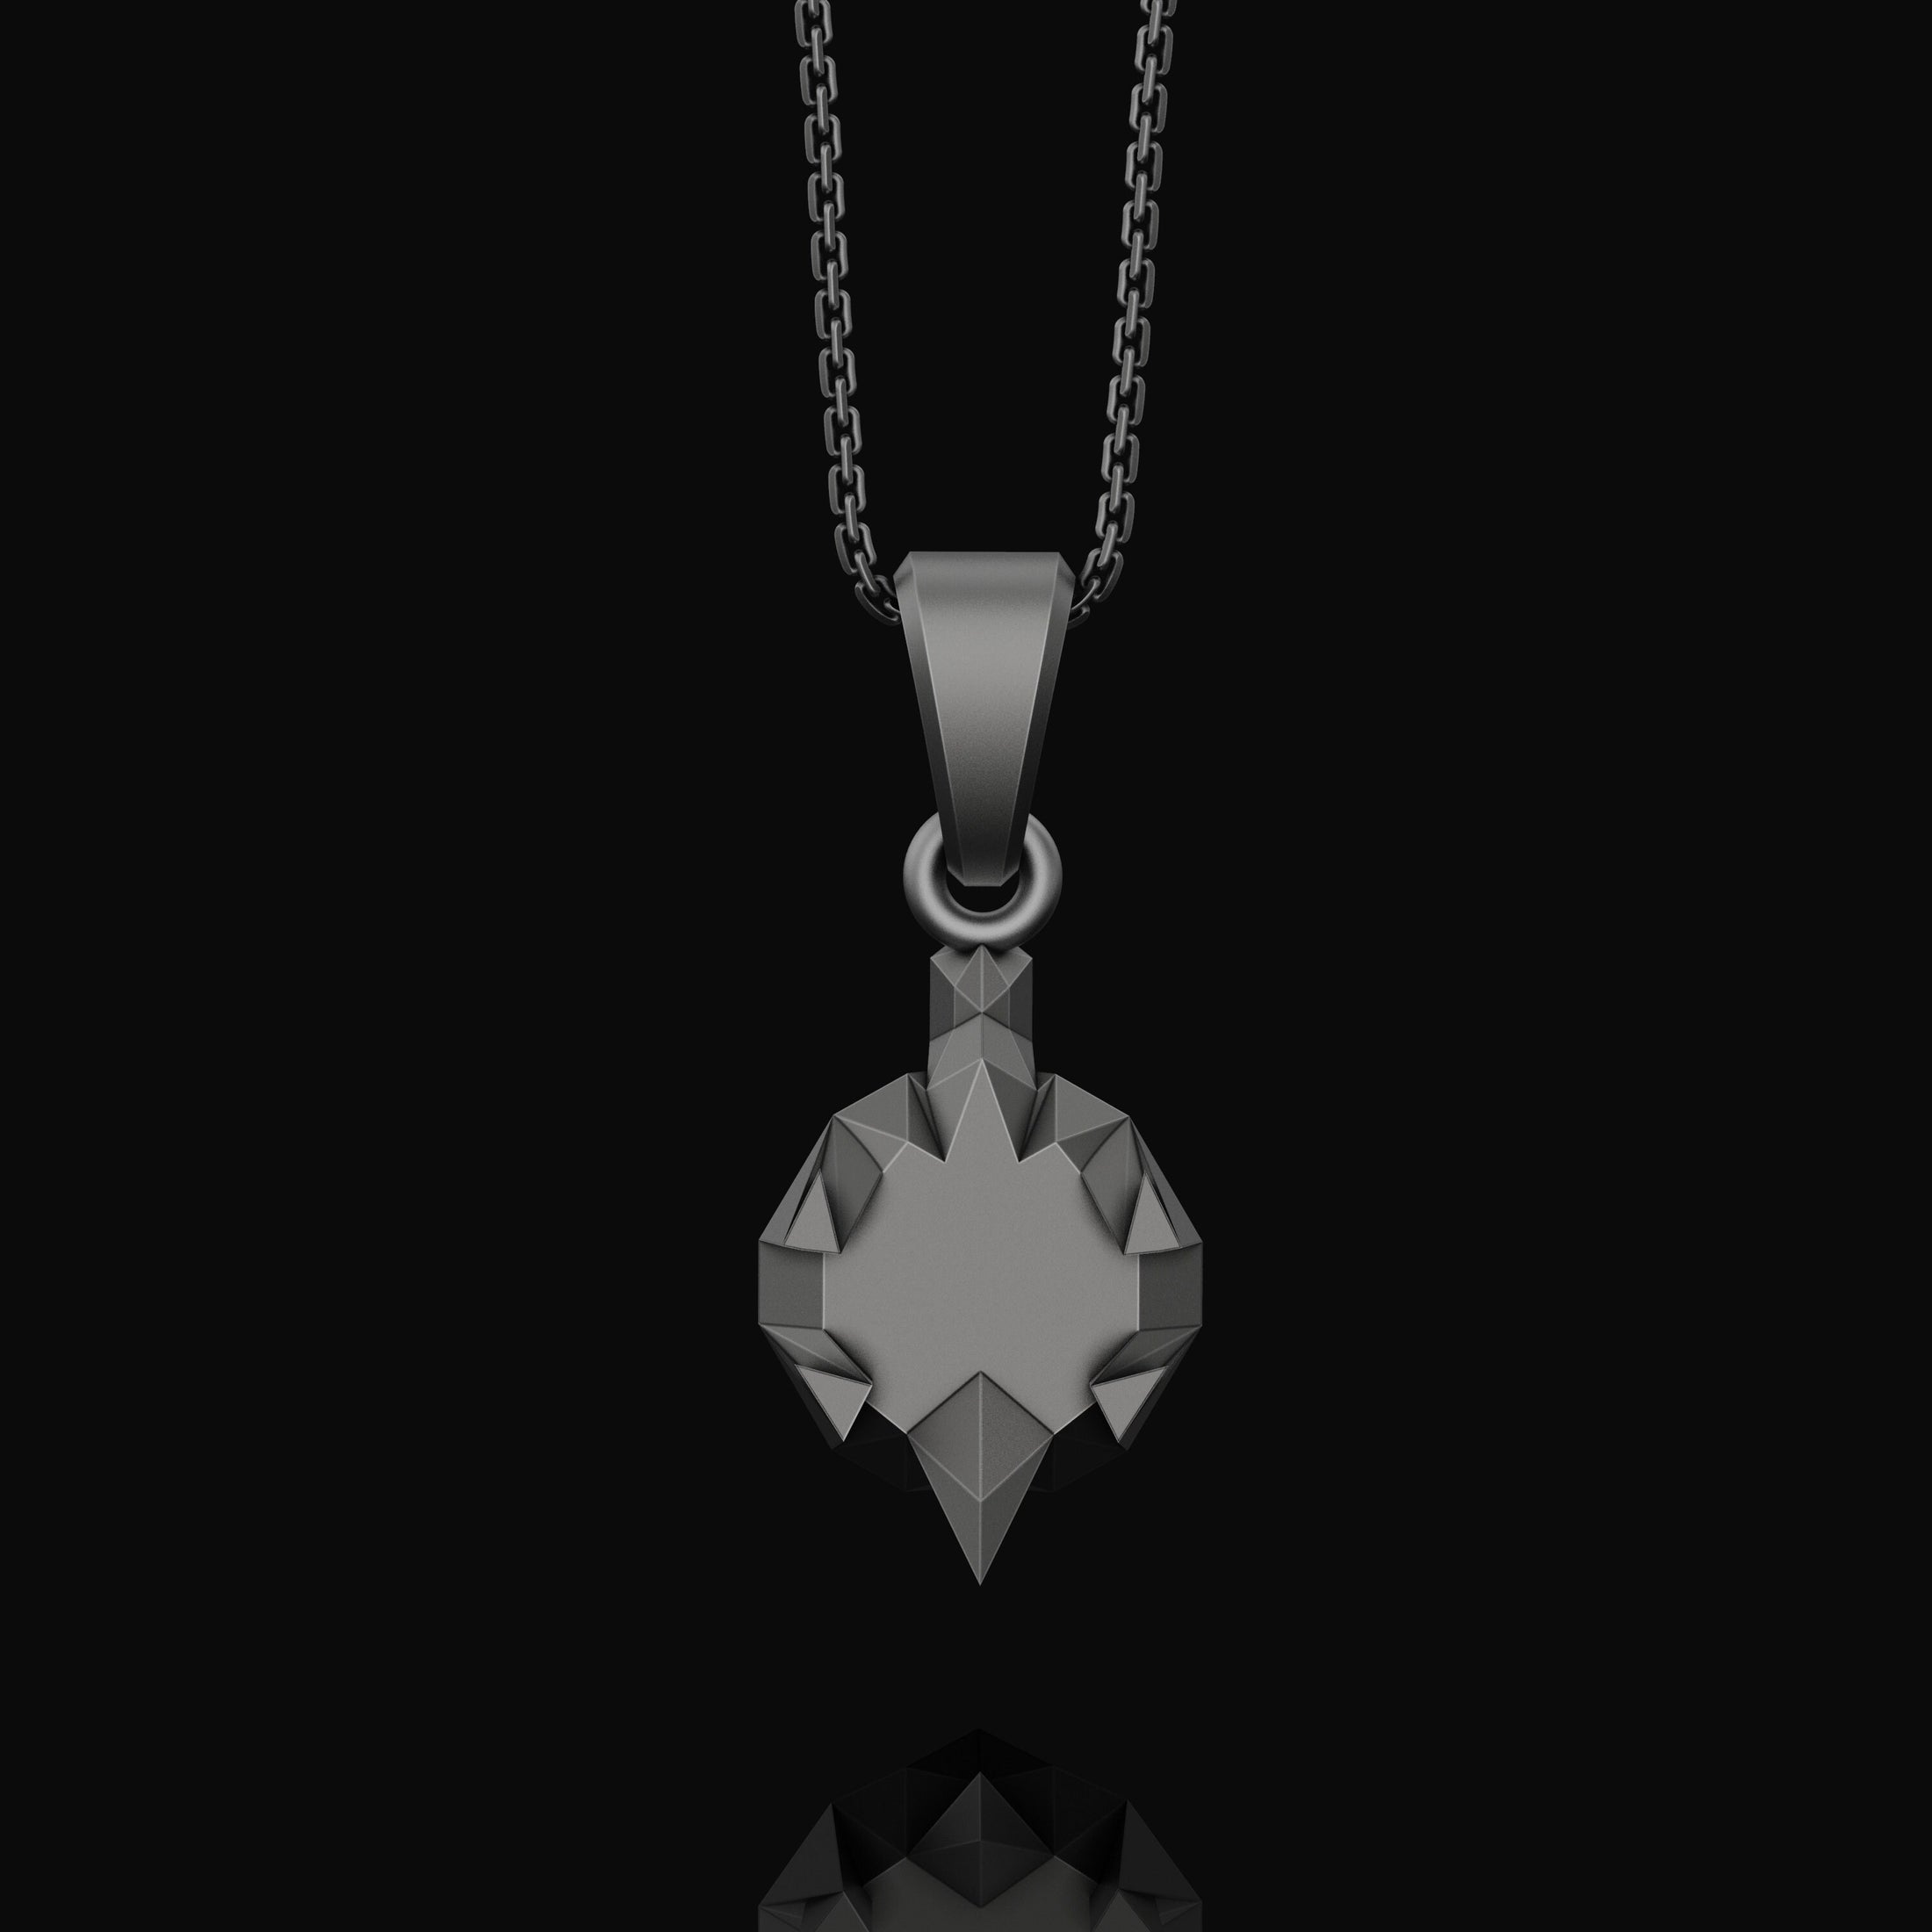 Origami Tortoise Charm Necklace - Silver Geometrical Pendant, Elegant Folded Turtle Design, Unique Artistic Jewelry